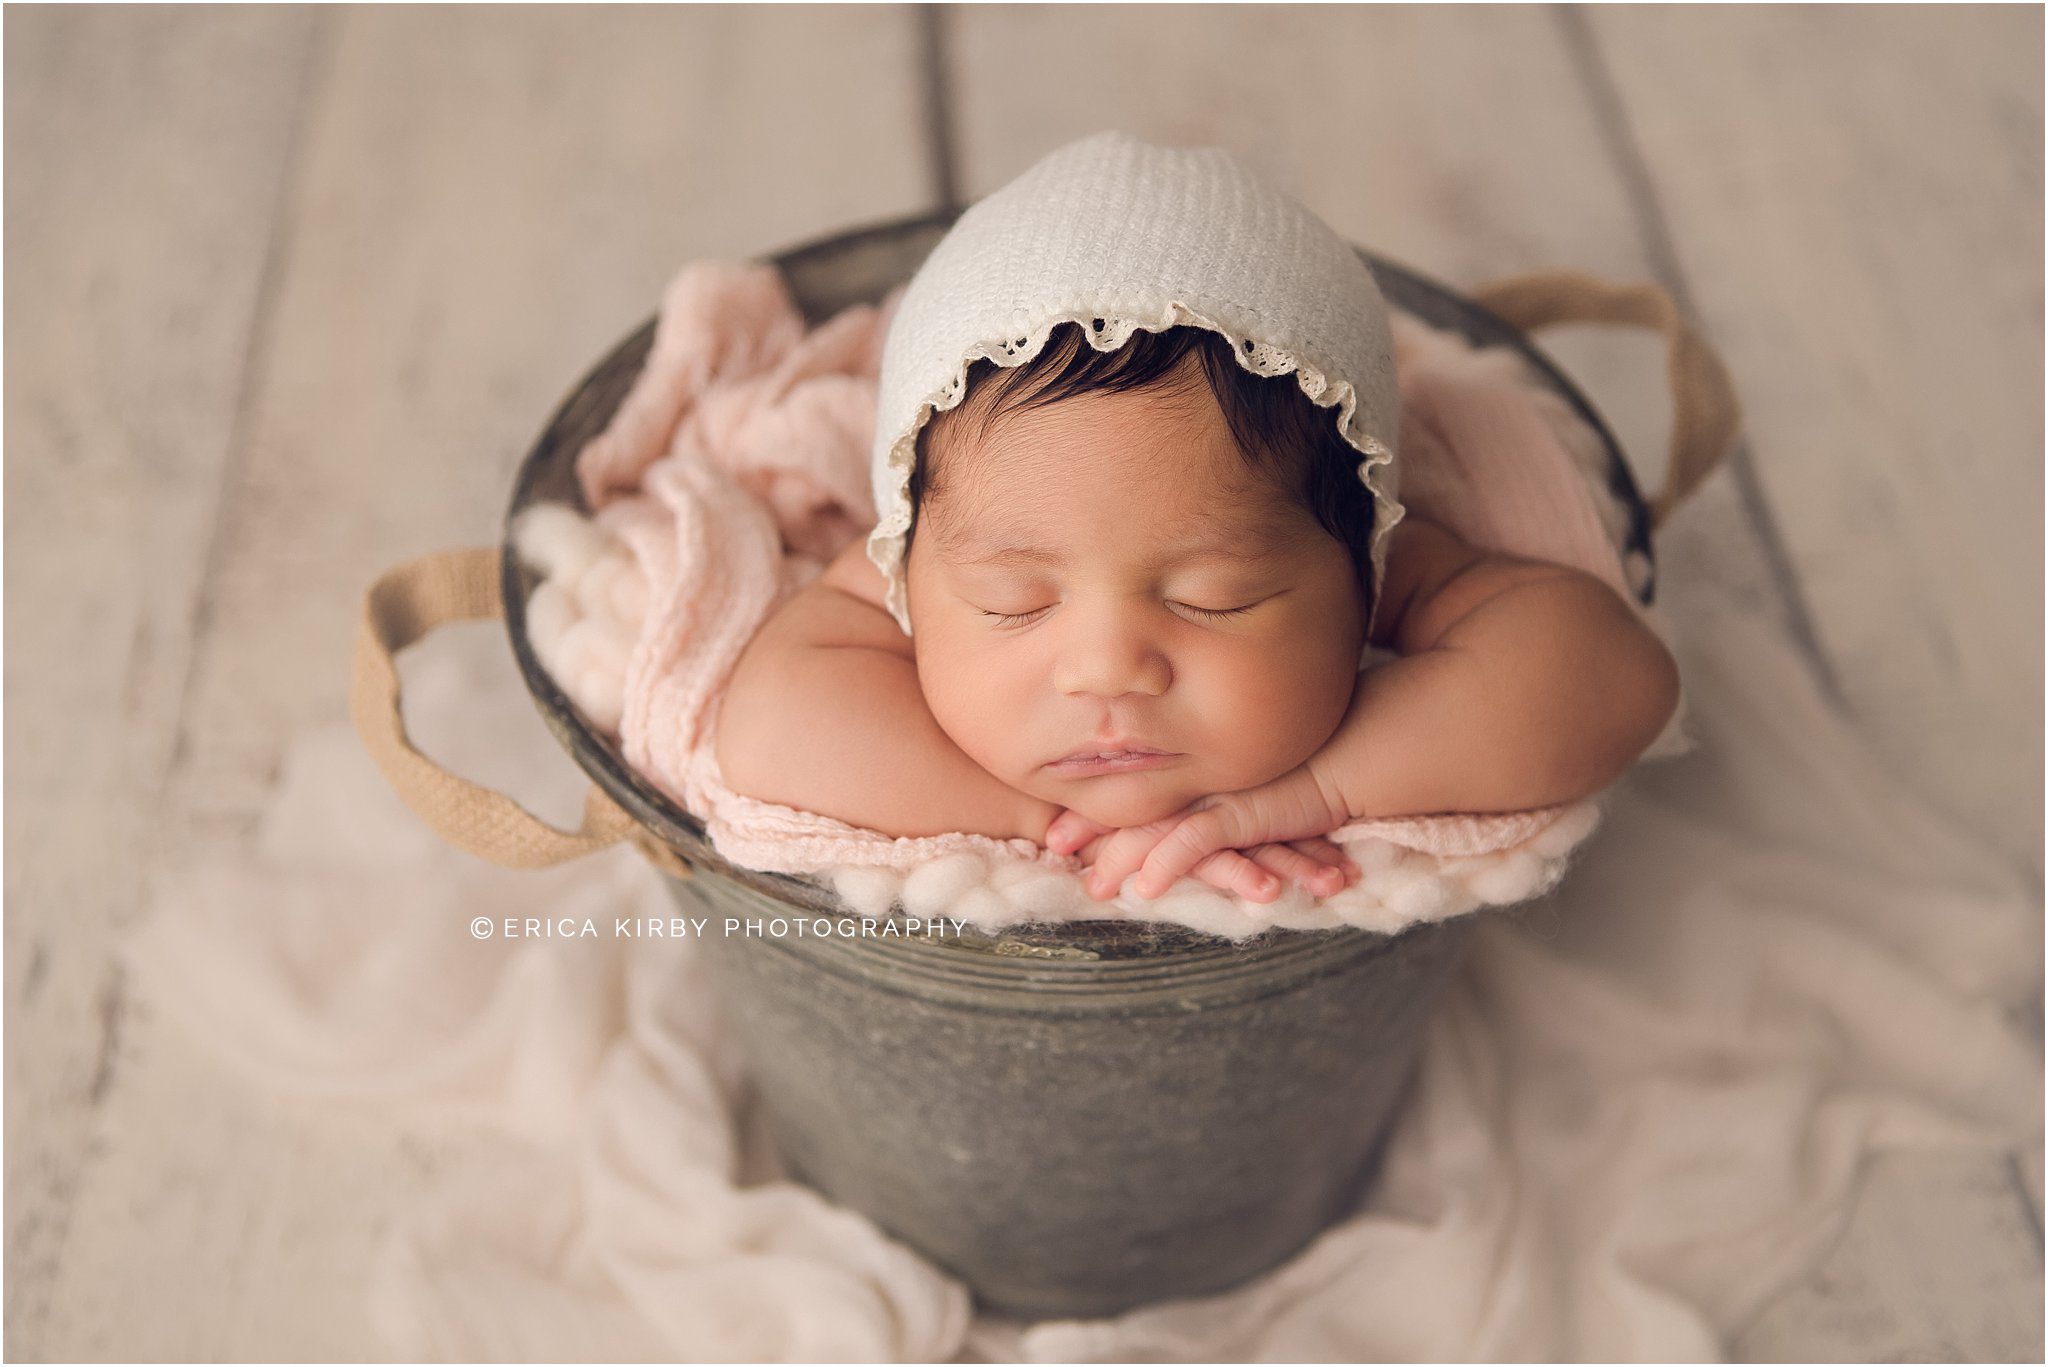 Newbornn Photo Session Bentonville - hispanic baby girl newborn photography - erica kirby photography